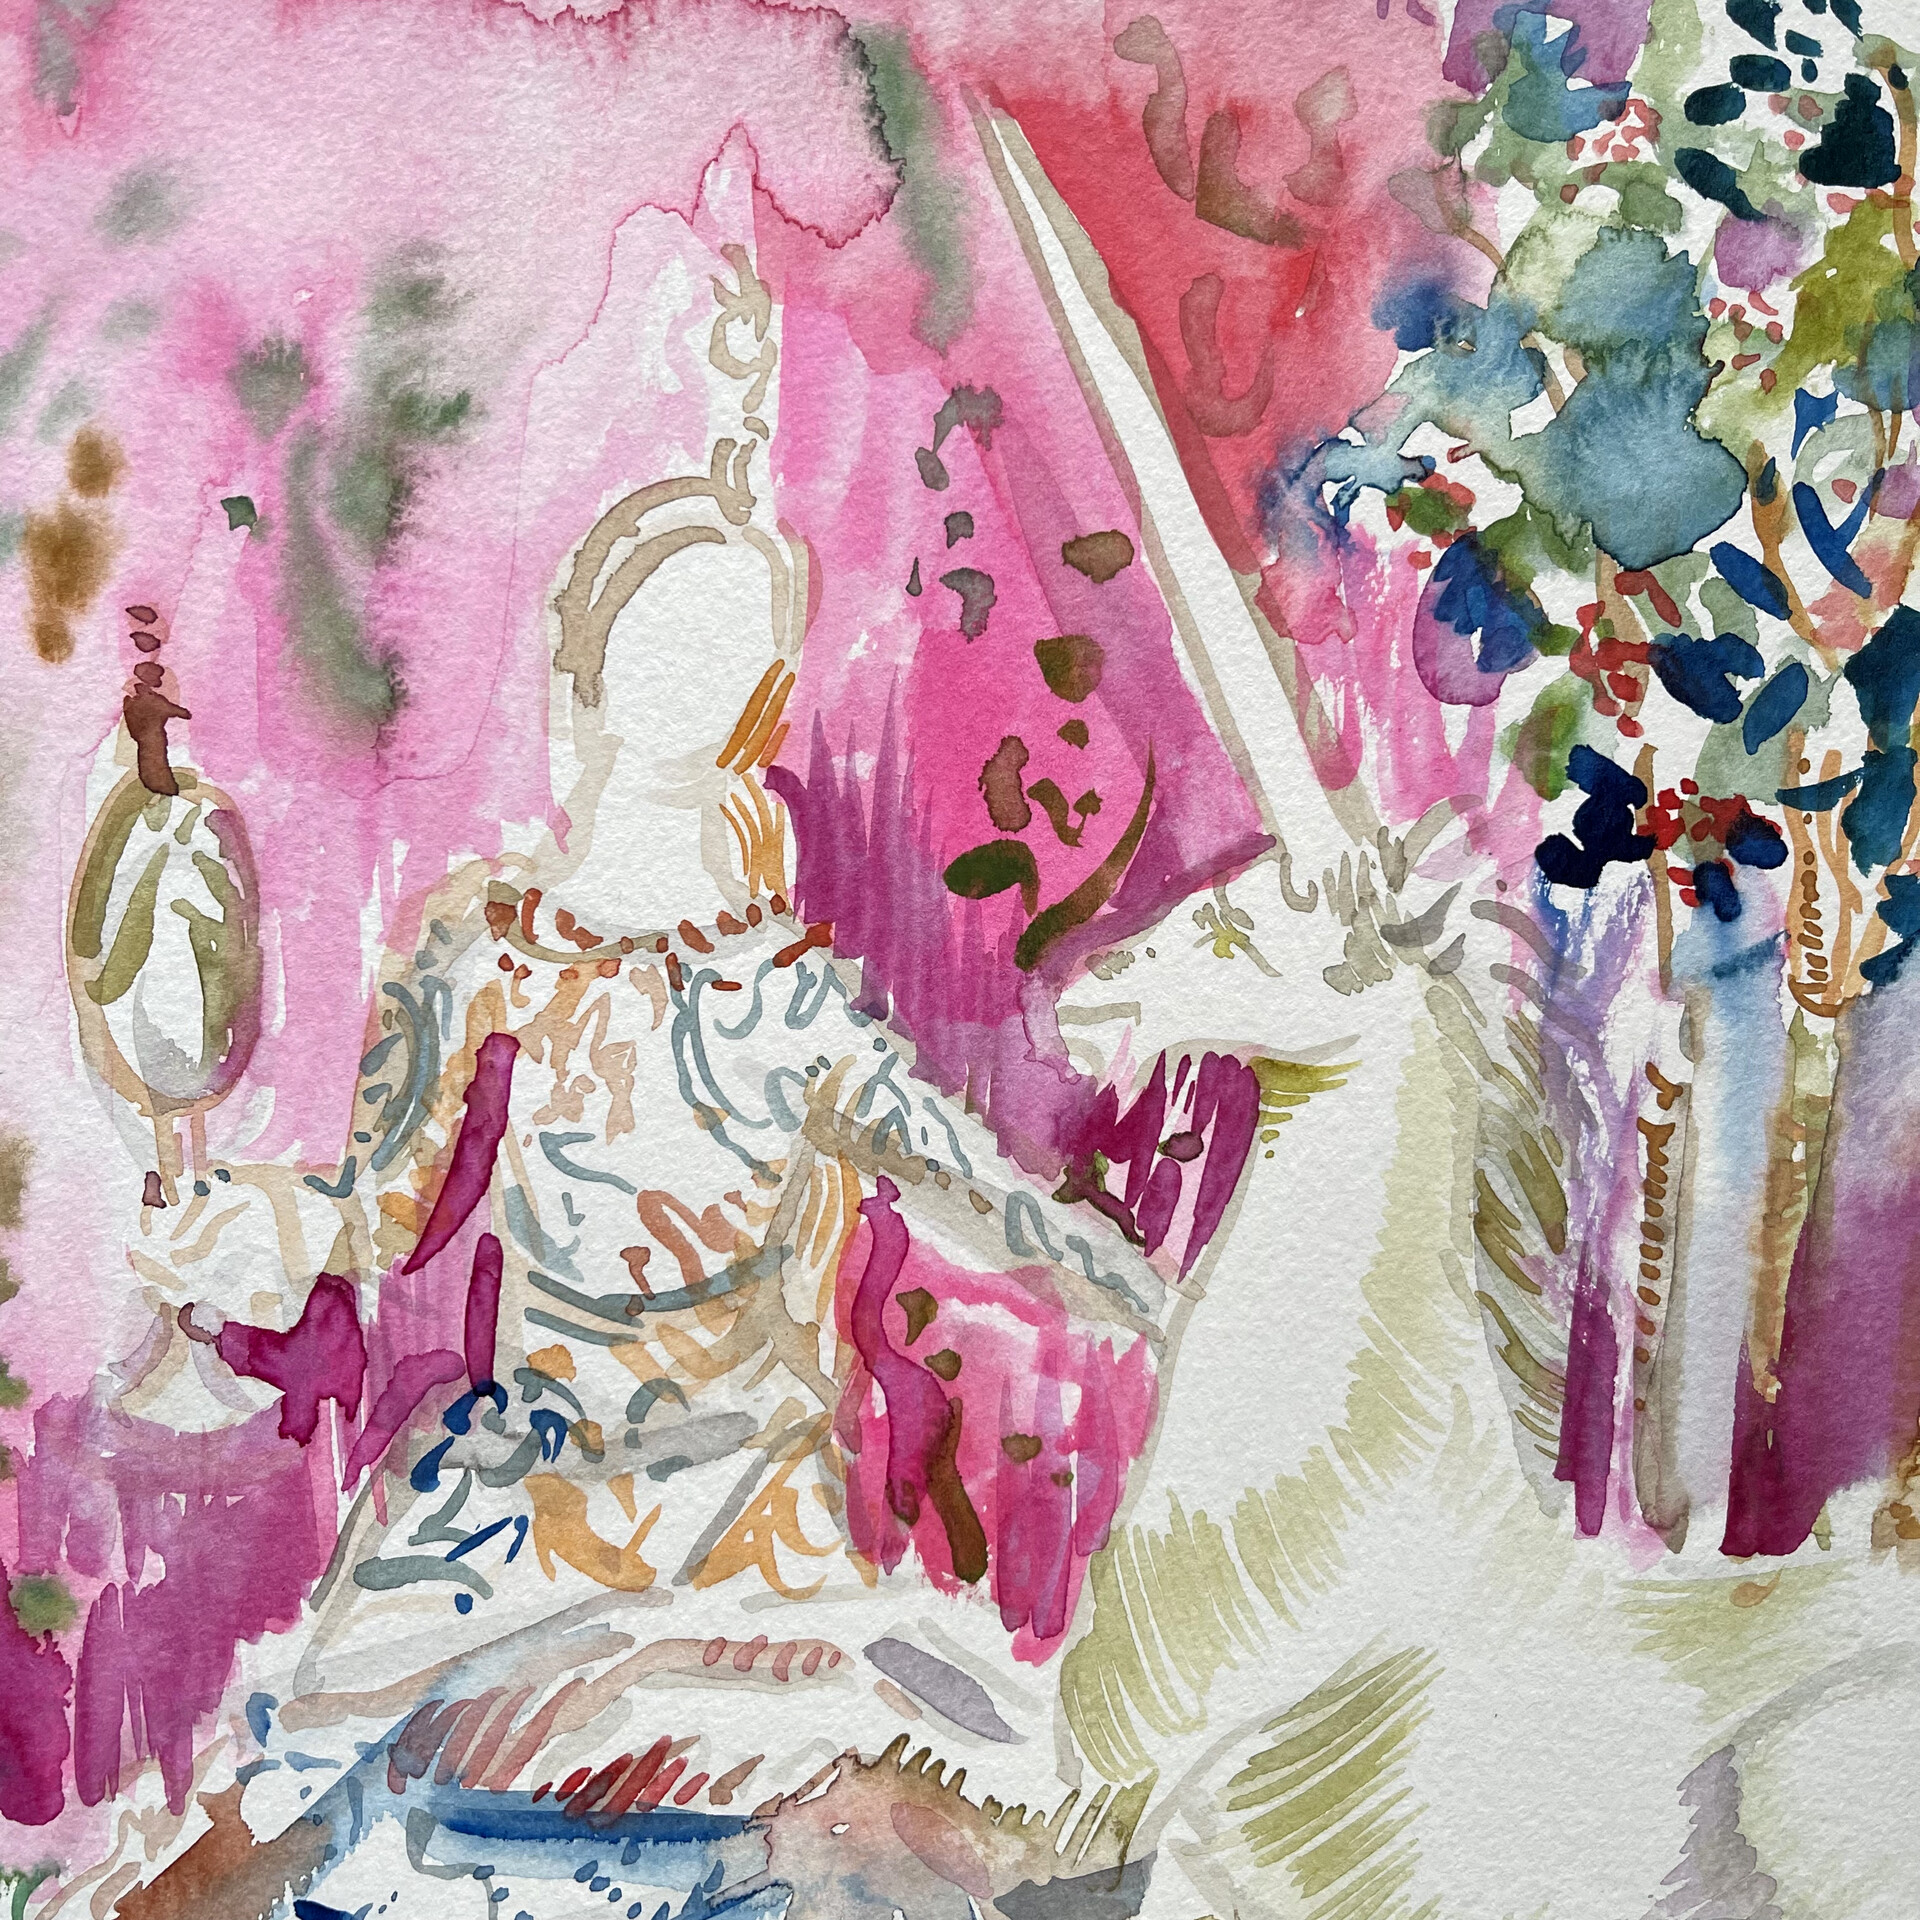 “La dame à la licorne”, 21 x 29,7, watercolours on paper, 2022